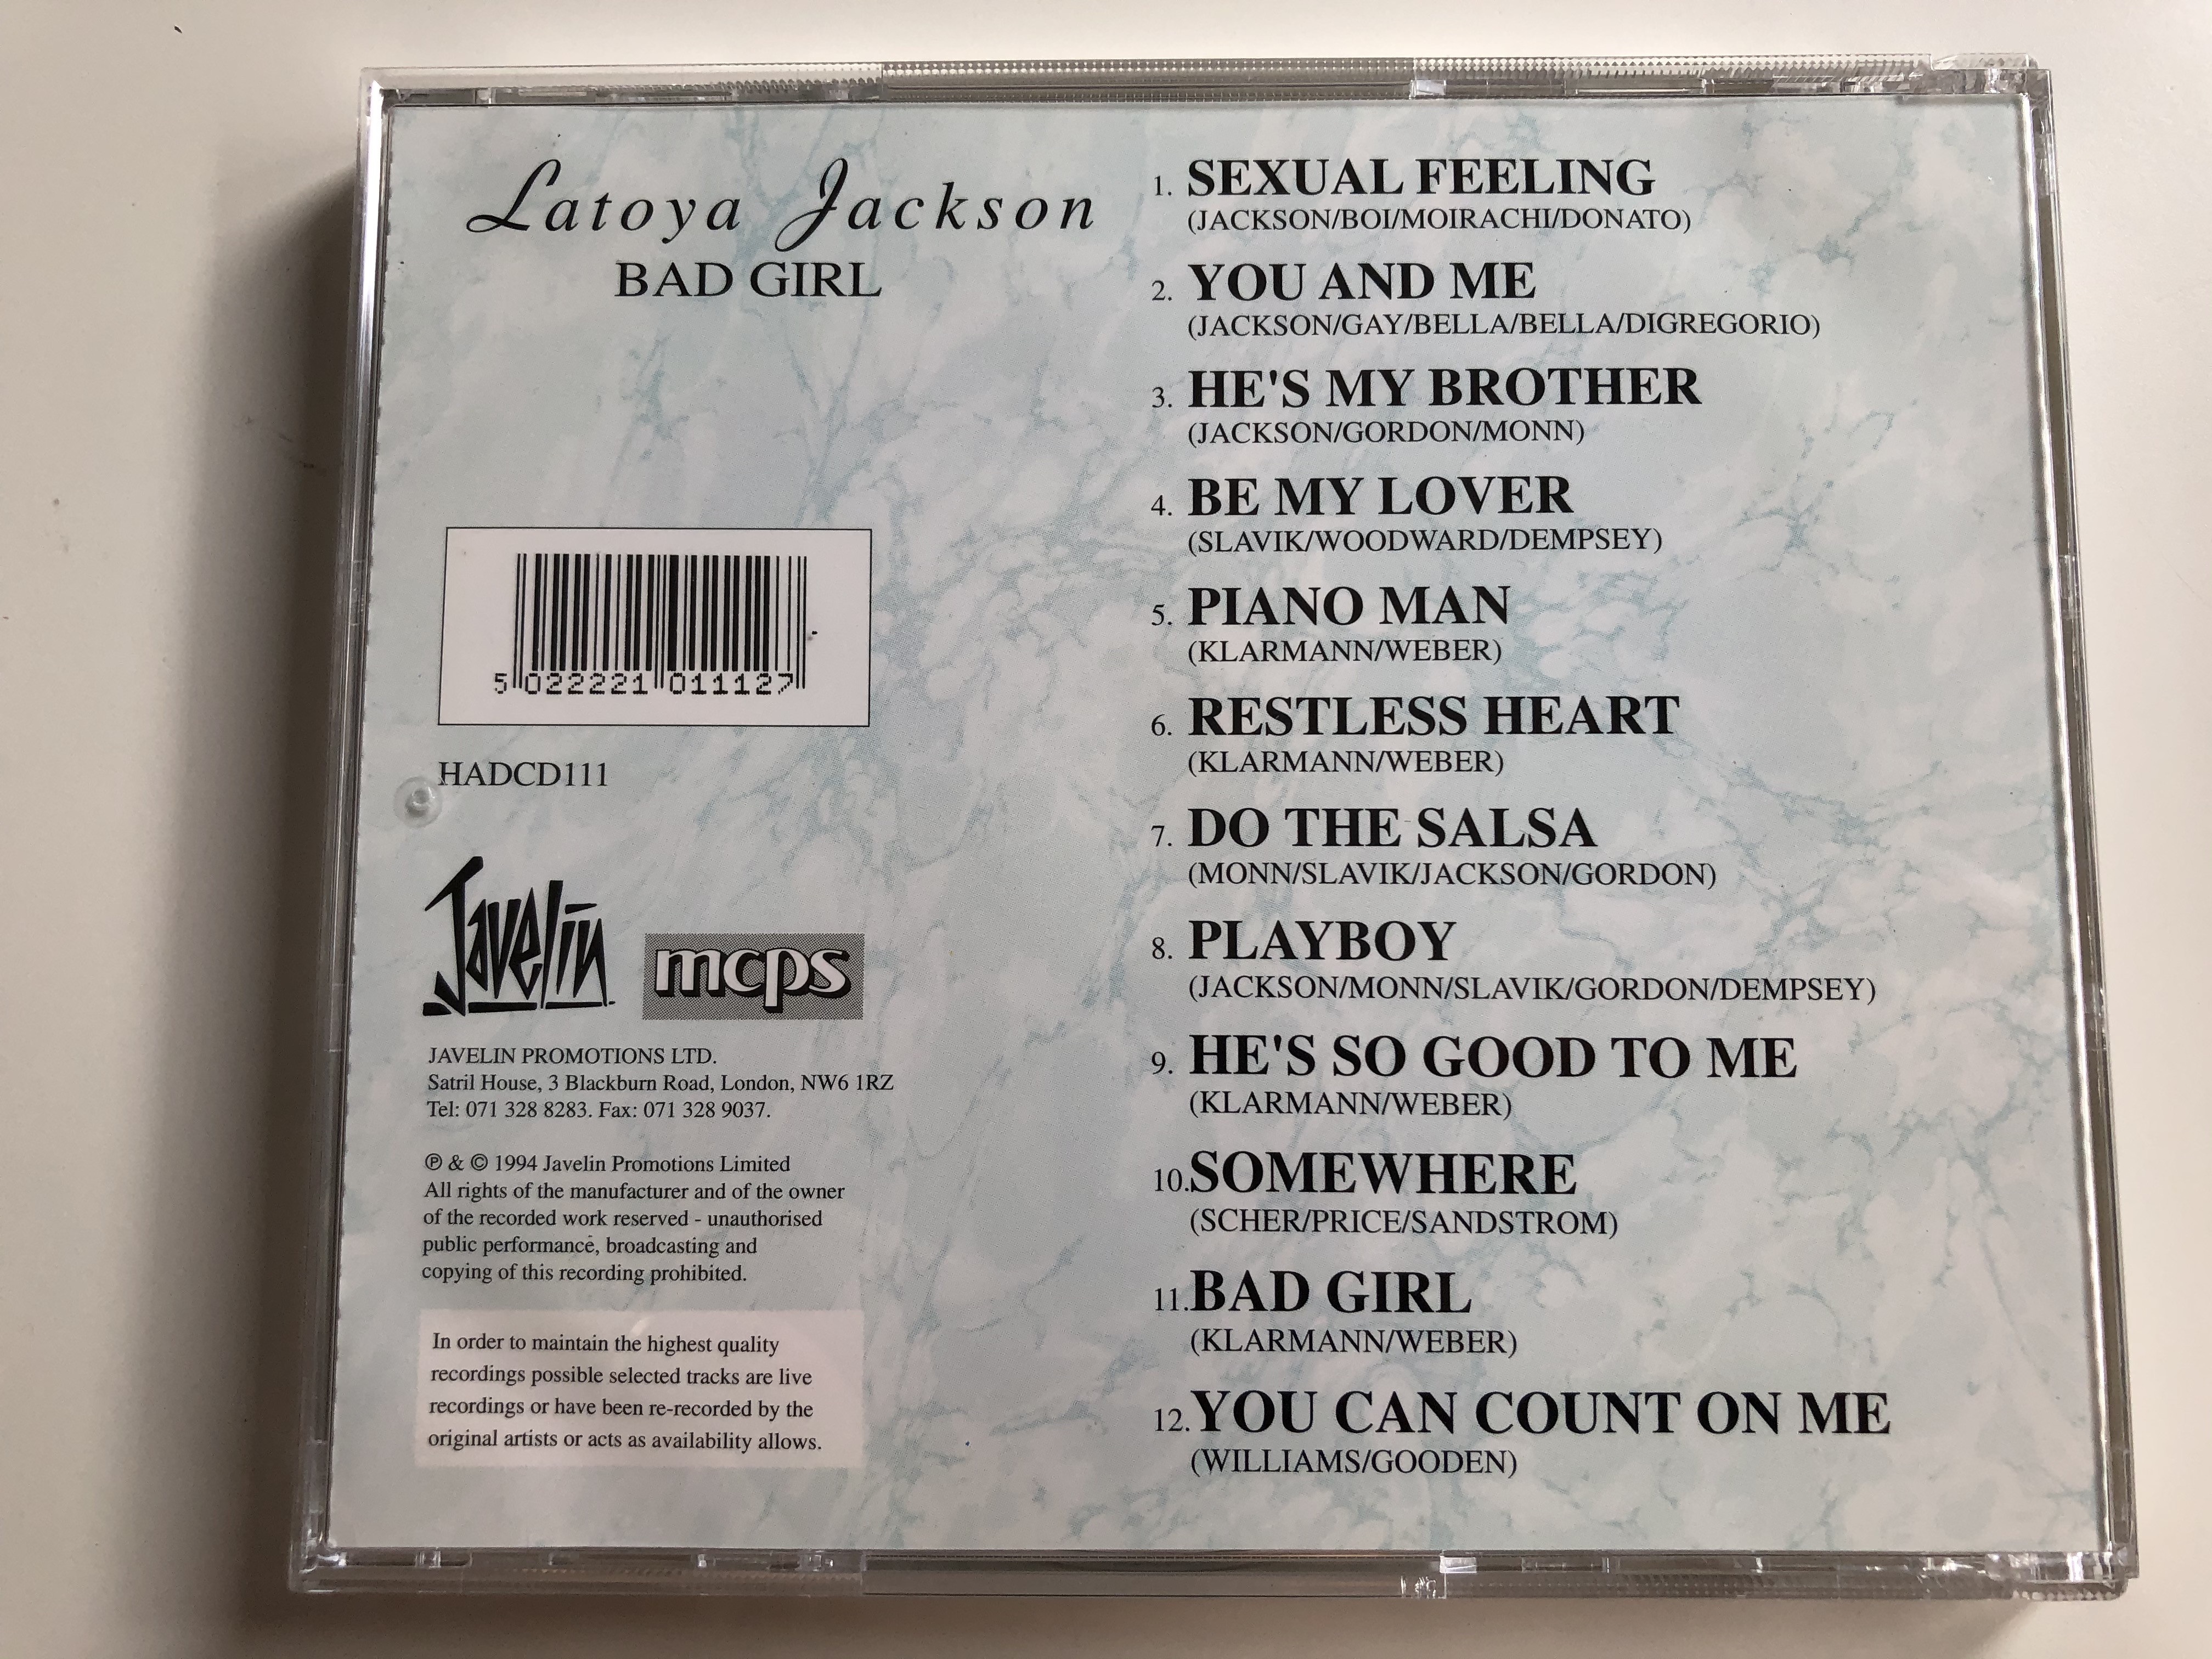 latoya-jackson-bad-girl-sexual-feeling-hes-my-brother-he-s-so-good-to-me-you-can-count-on-me-javelin-audio-cd-1993-had-cd-111-4-.jpg